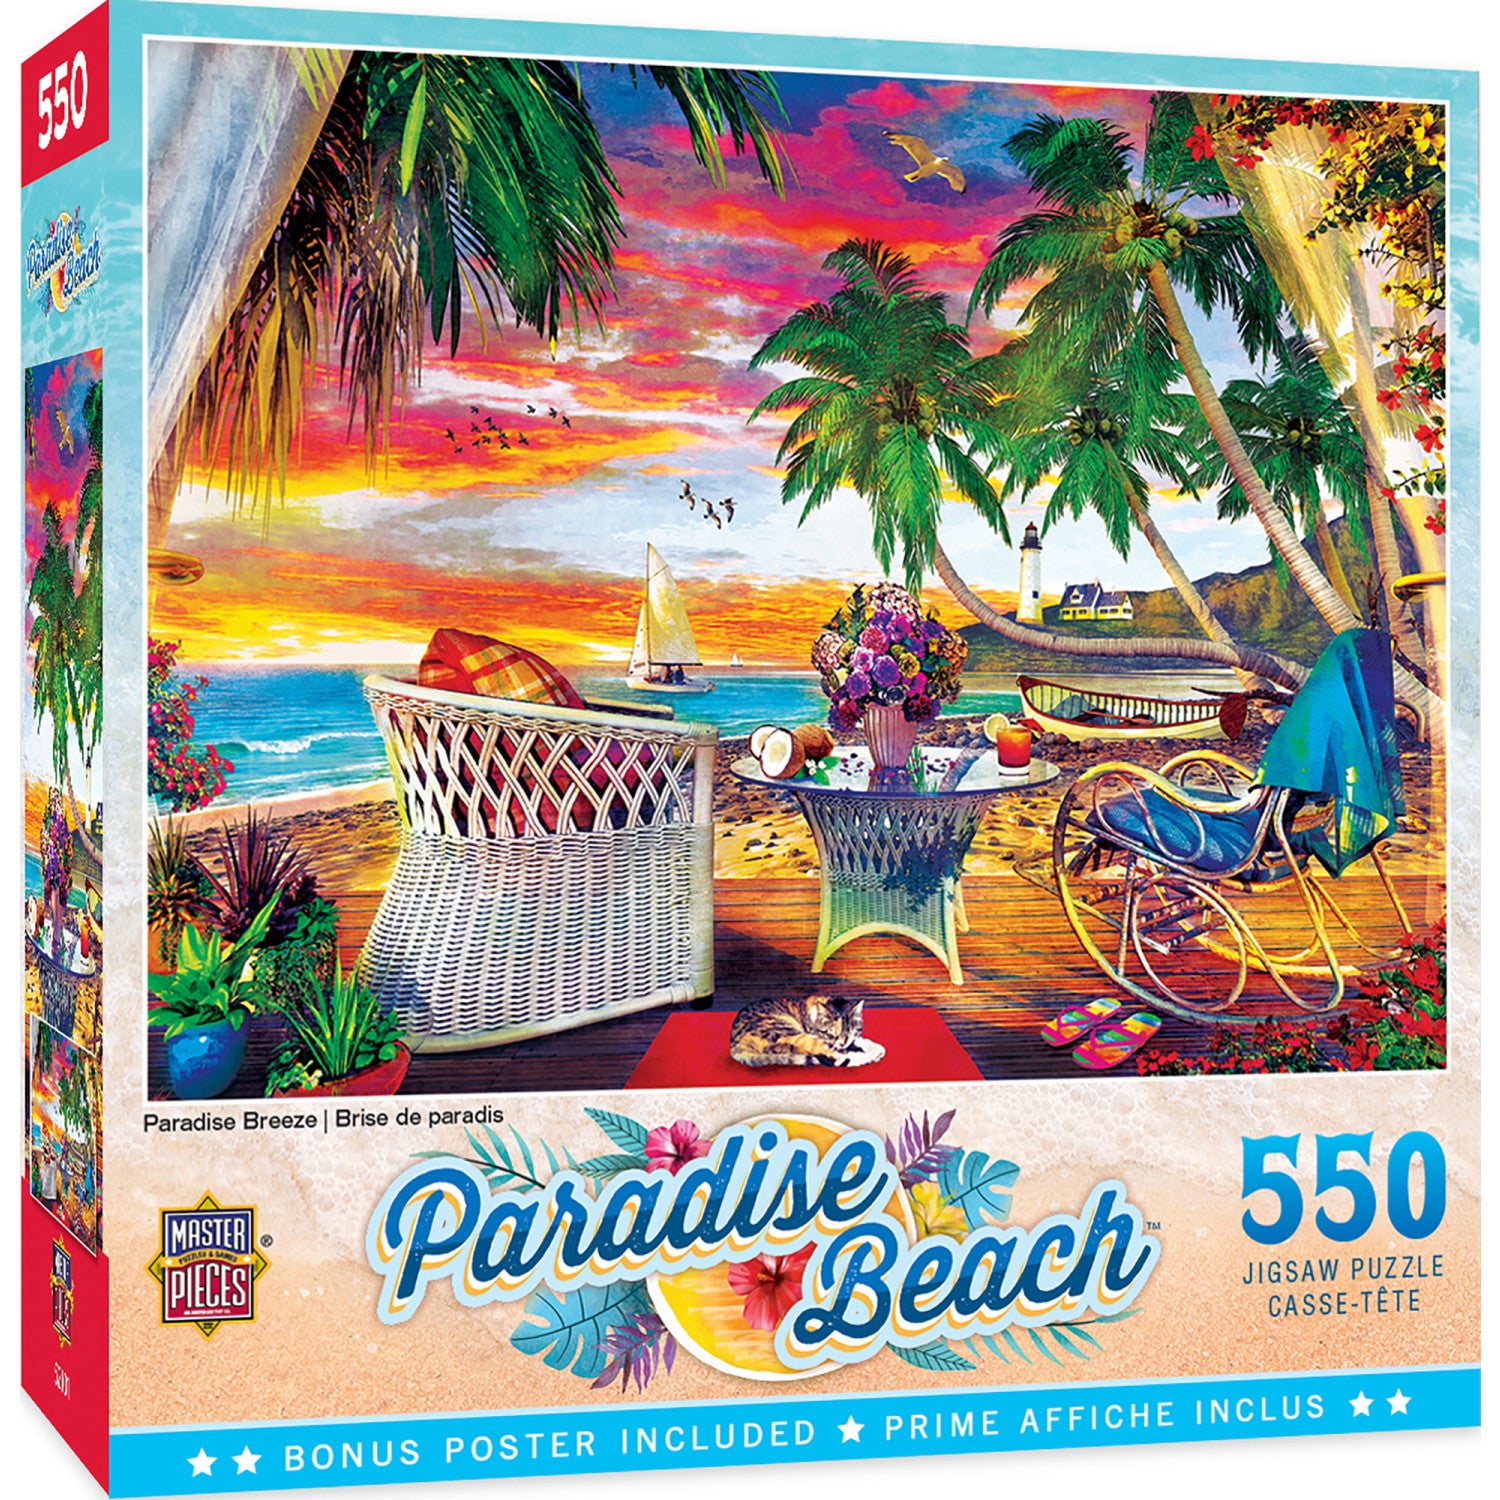 Paradise Beach - Paradise Breeze 550 Piece Jigsaw Puzzle